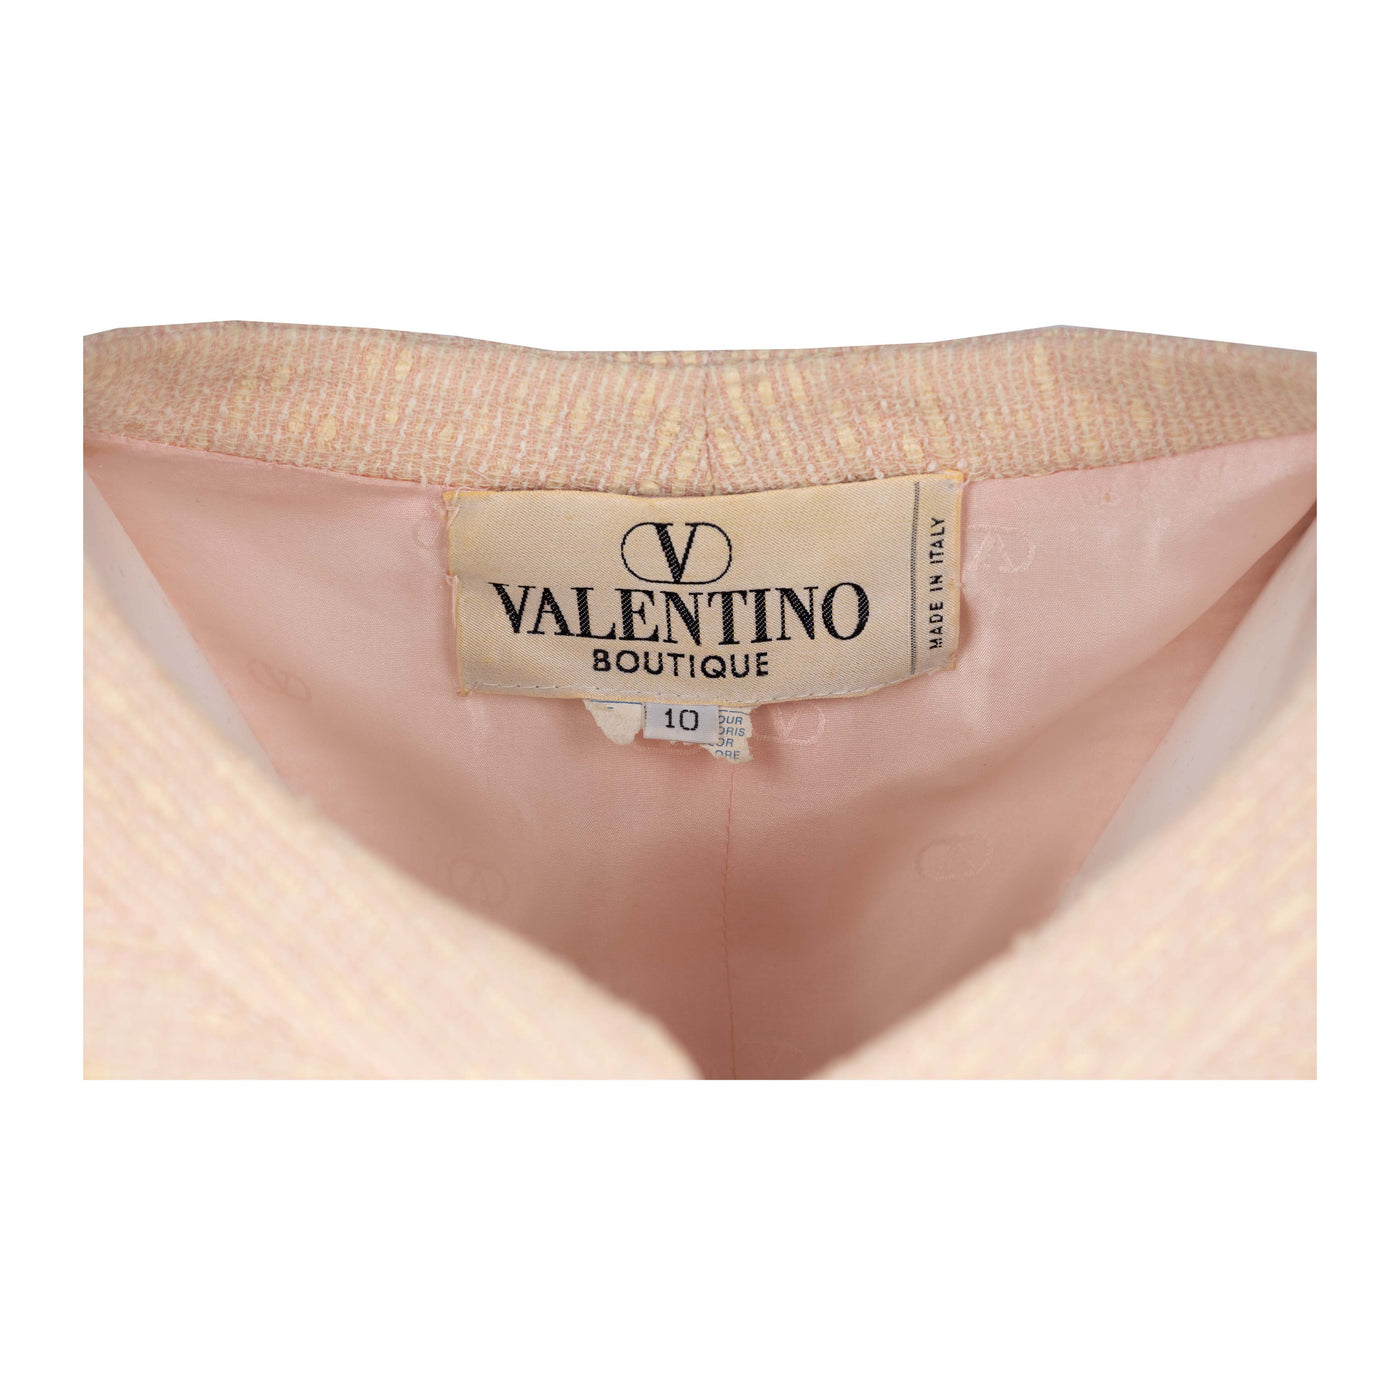 Secondhand Valentino Pale Pink Wool Jacket